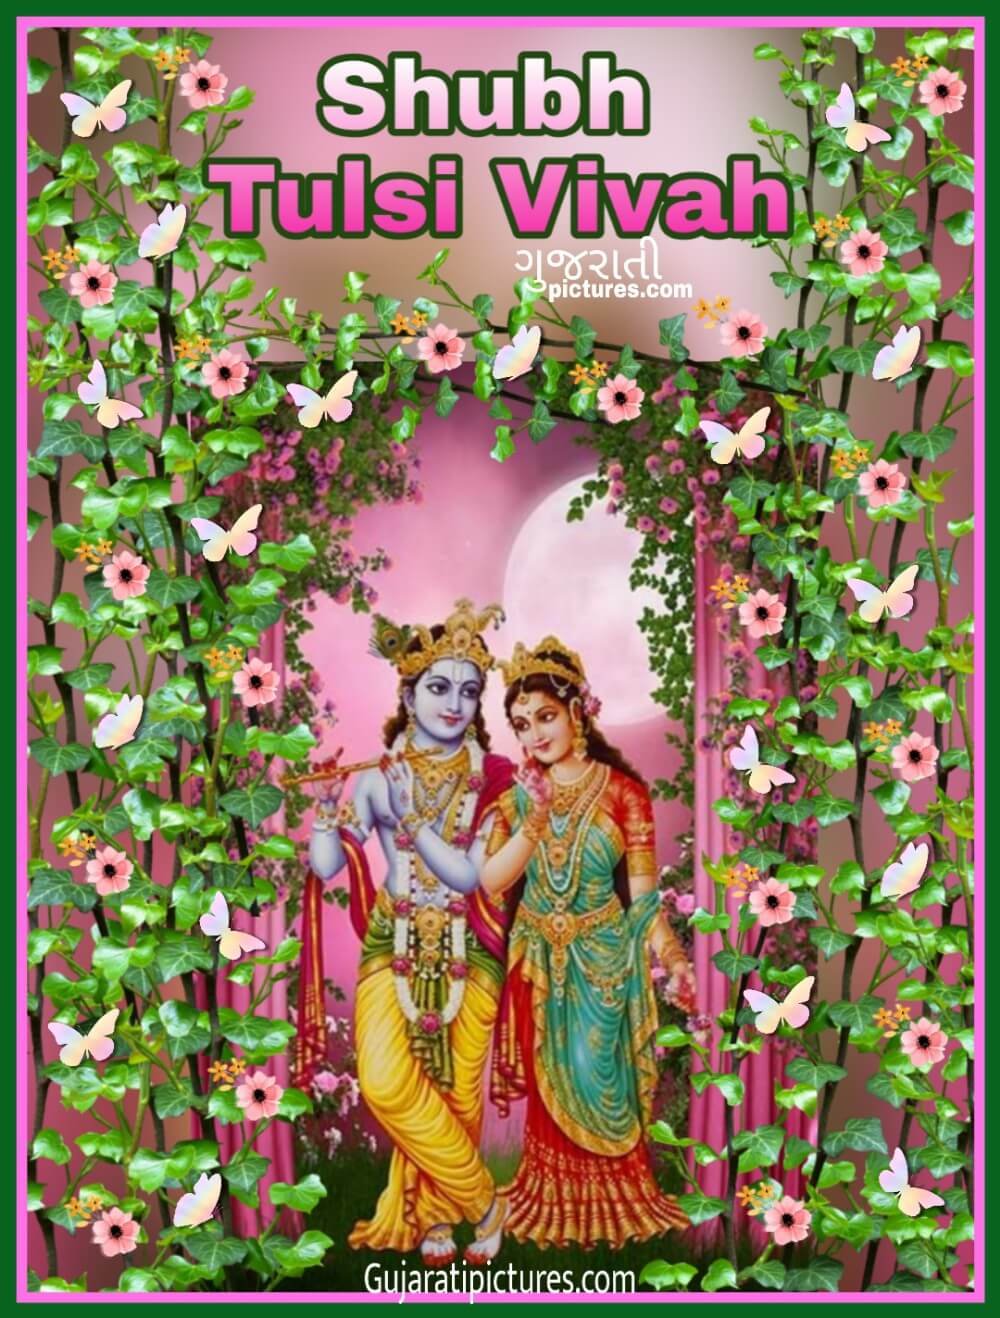 Tulsi Vivah Post - Gujarati Pictures – Website Dedicated to ...